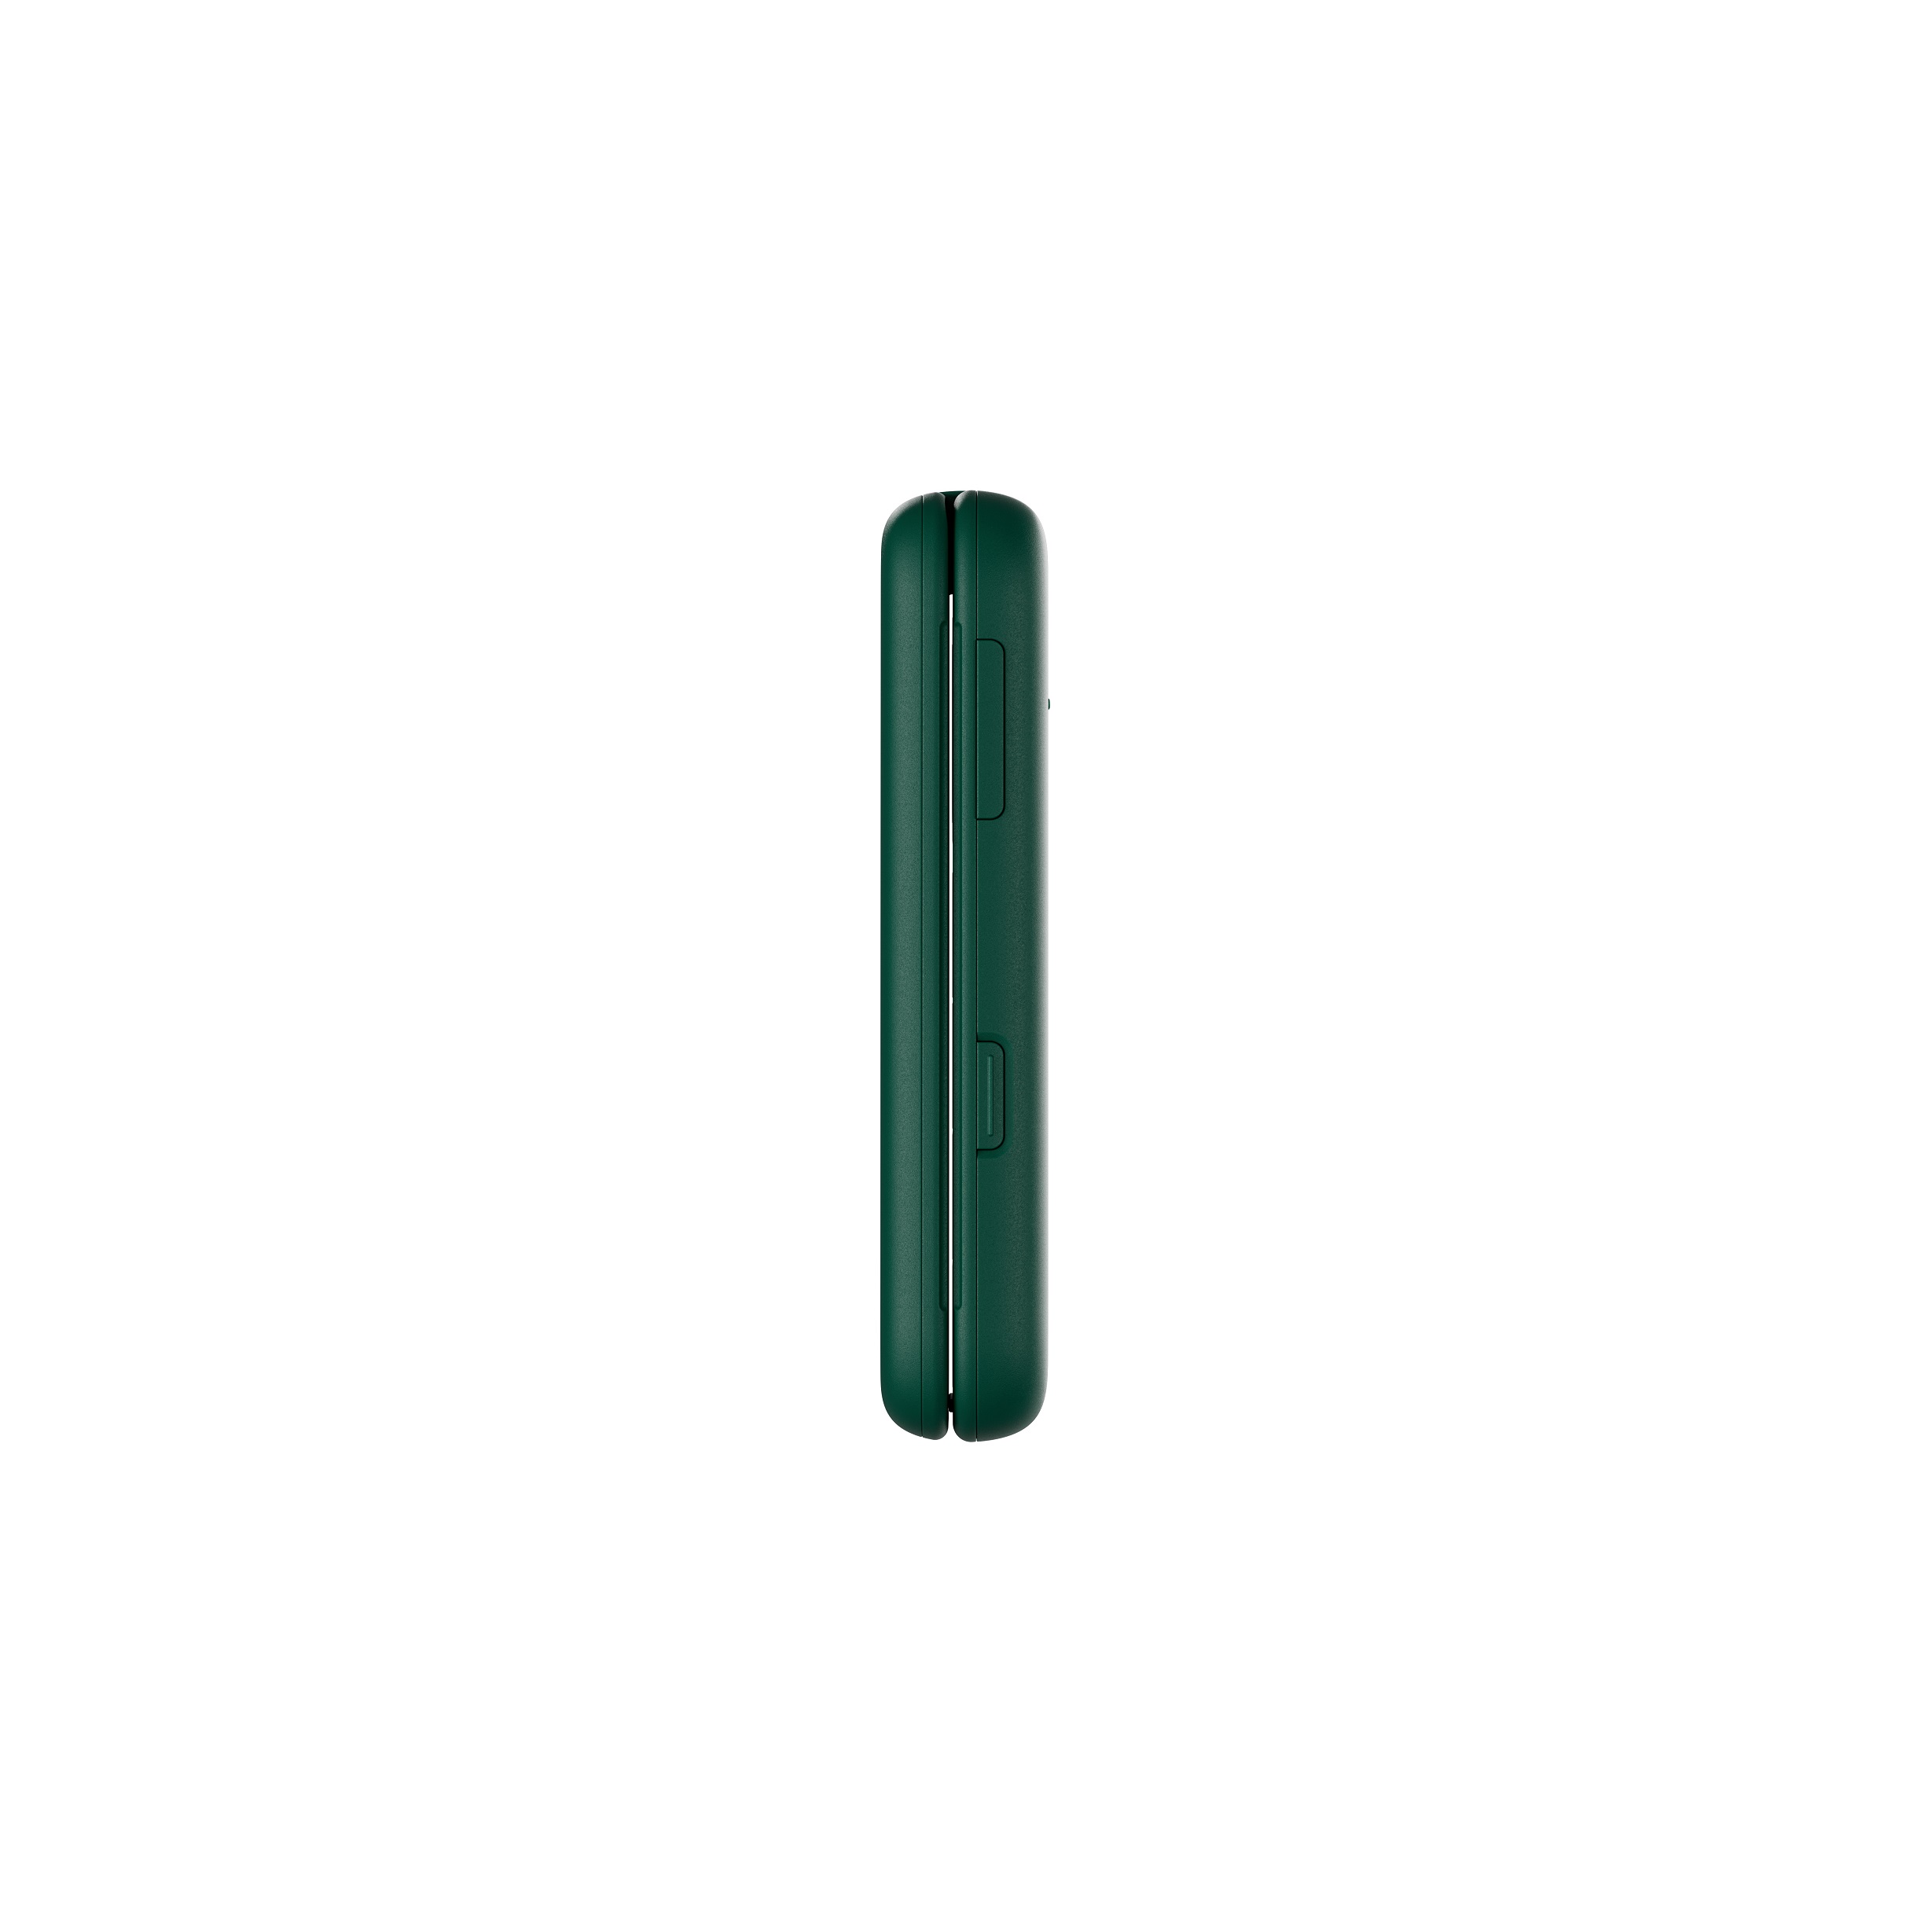 Nokia 2660 Flip Dual SIM Lush Green 